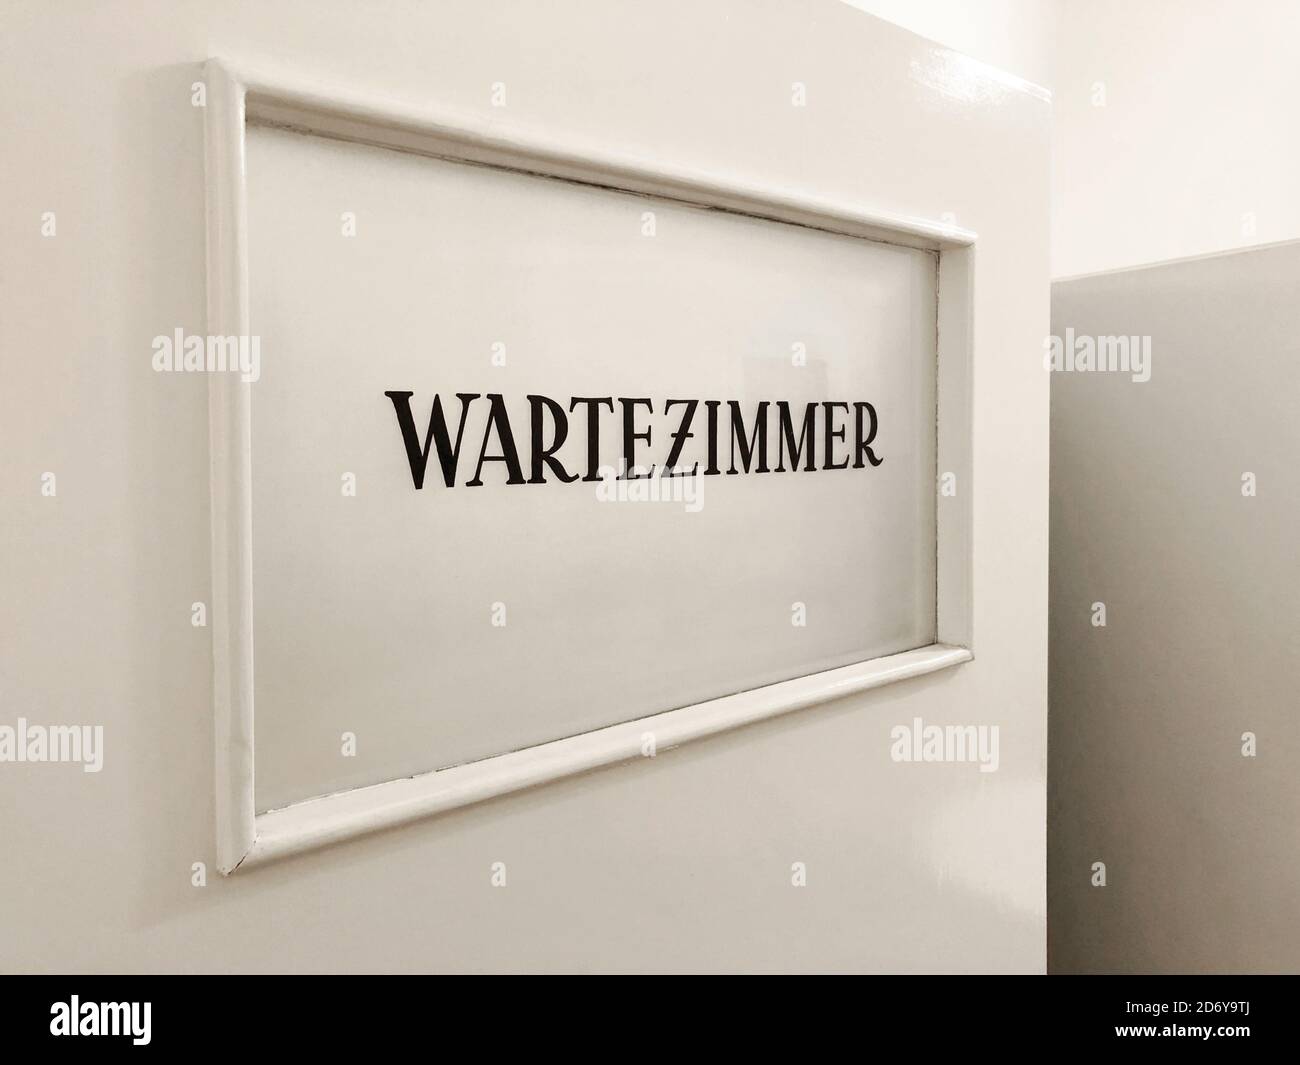 Wartezimmer is german for waiting room - sign on door in GP or doctor's practice Stock Photo